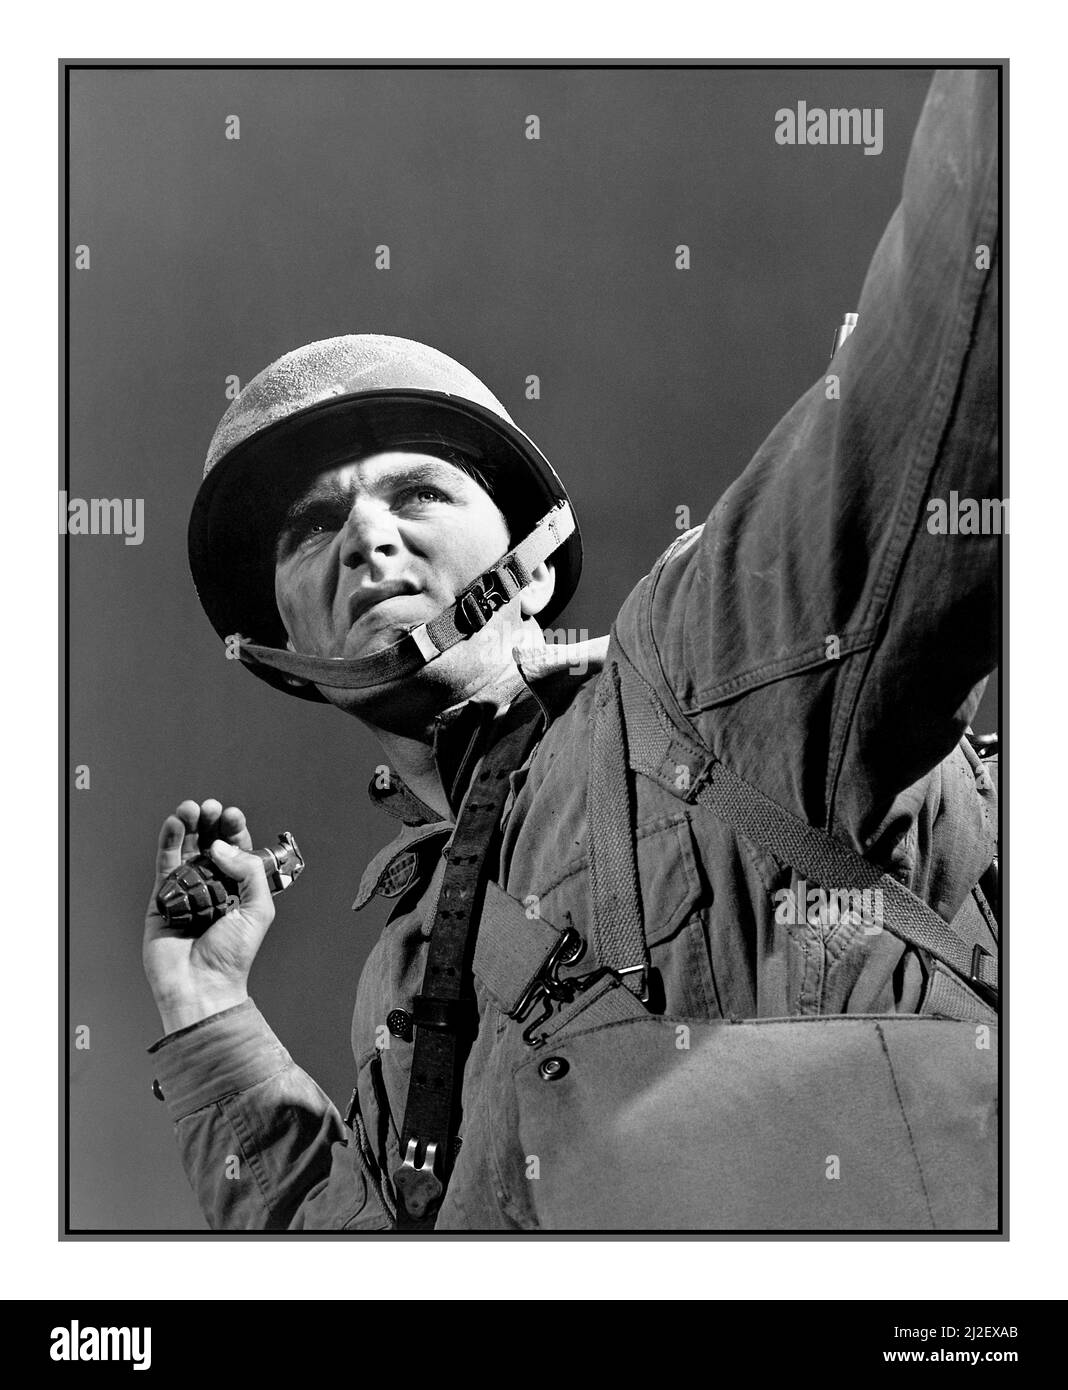 GRENADE THROWING WW2 American Propaganda Image 'A package for Hitler', Belvoir Virginia. Grenade throwers. An infantryman in training at Fort Belvoir, Virginia prepares to hurl a grenade. November 1942  Photographer Alfred T. Palmer World War II Second World War Stock Photo